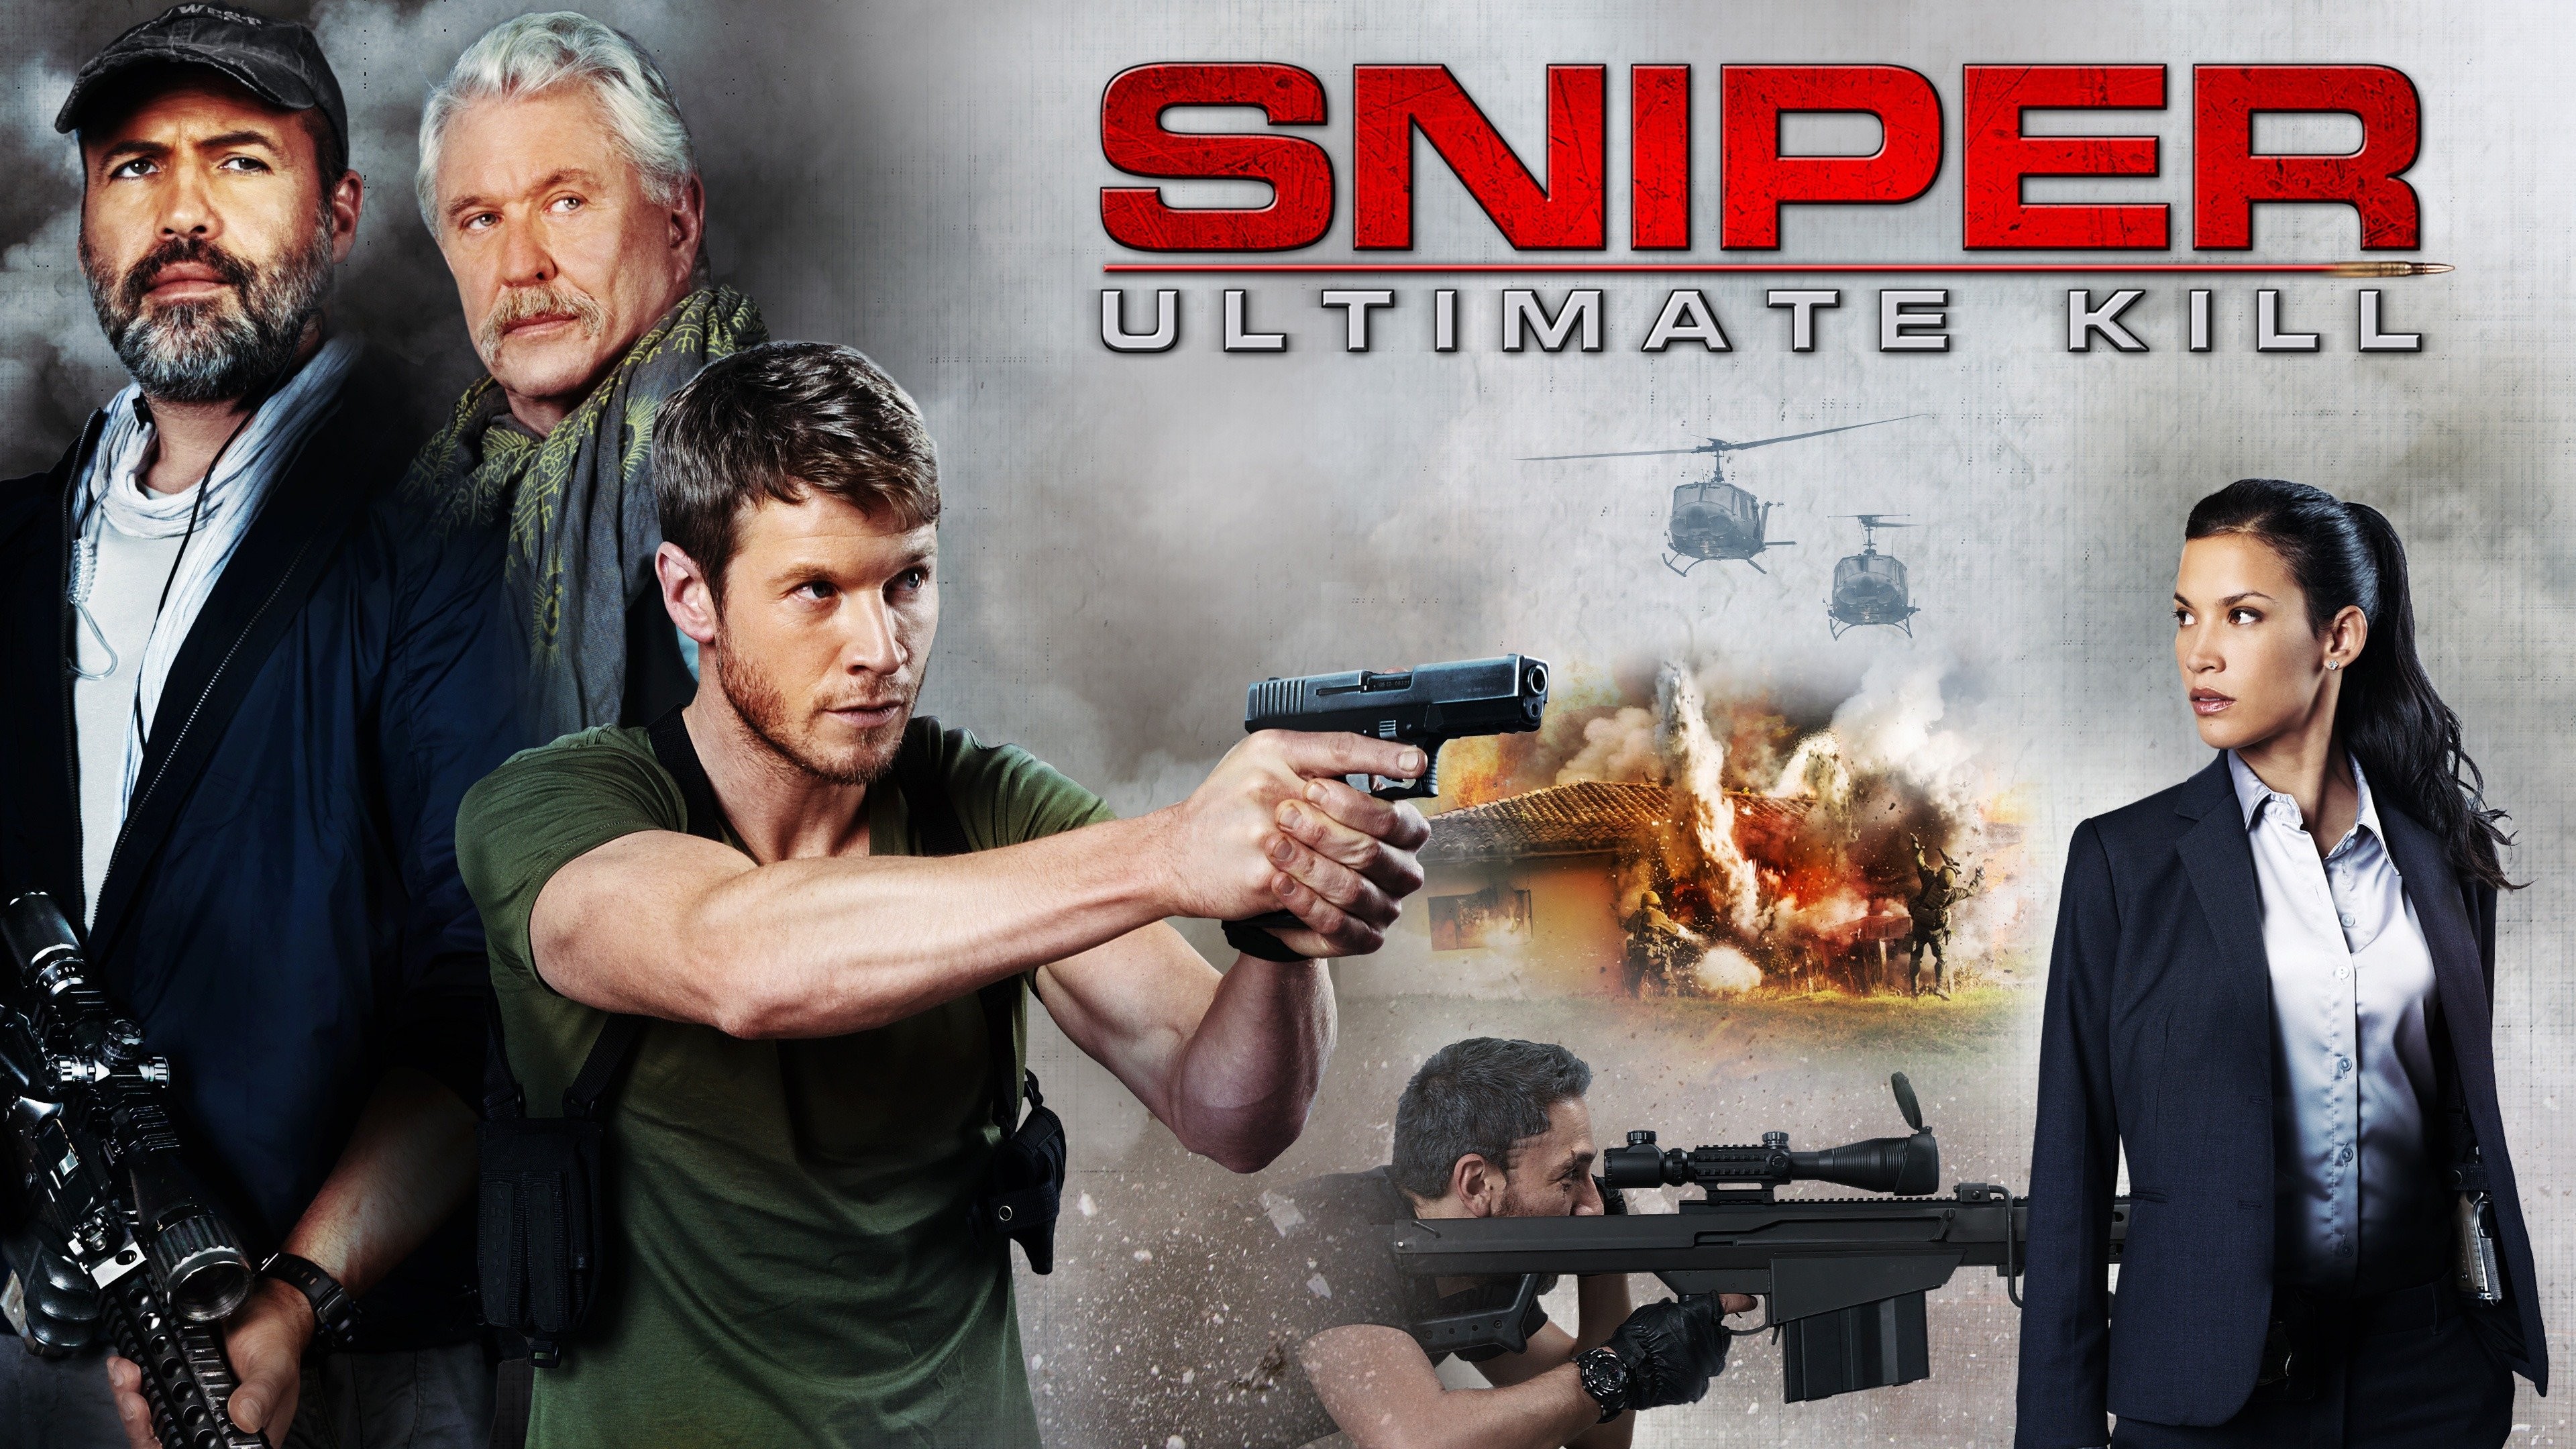 Sniper ultimate kill 2017